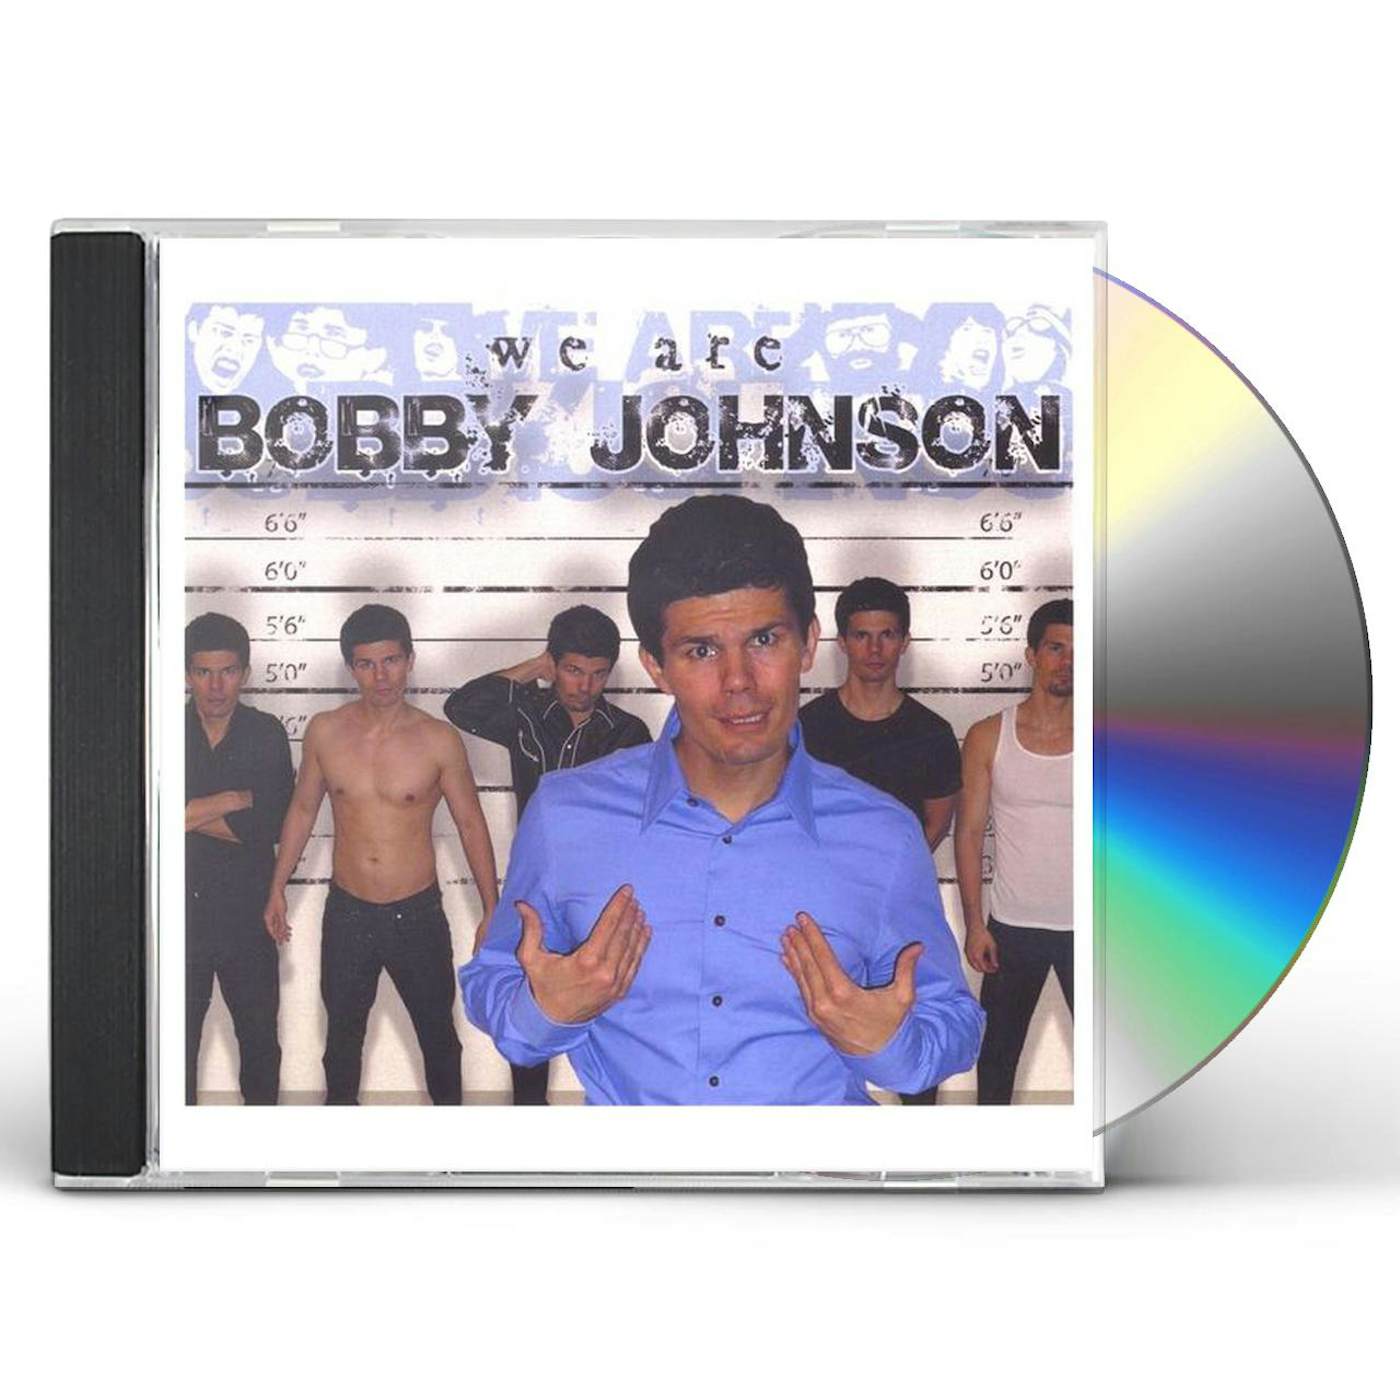 WE ARE BOBBY JOHNSON CD